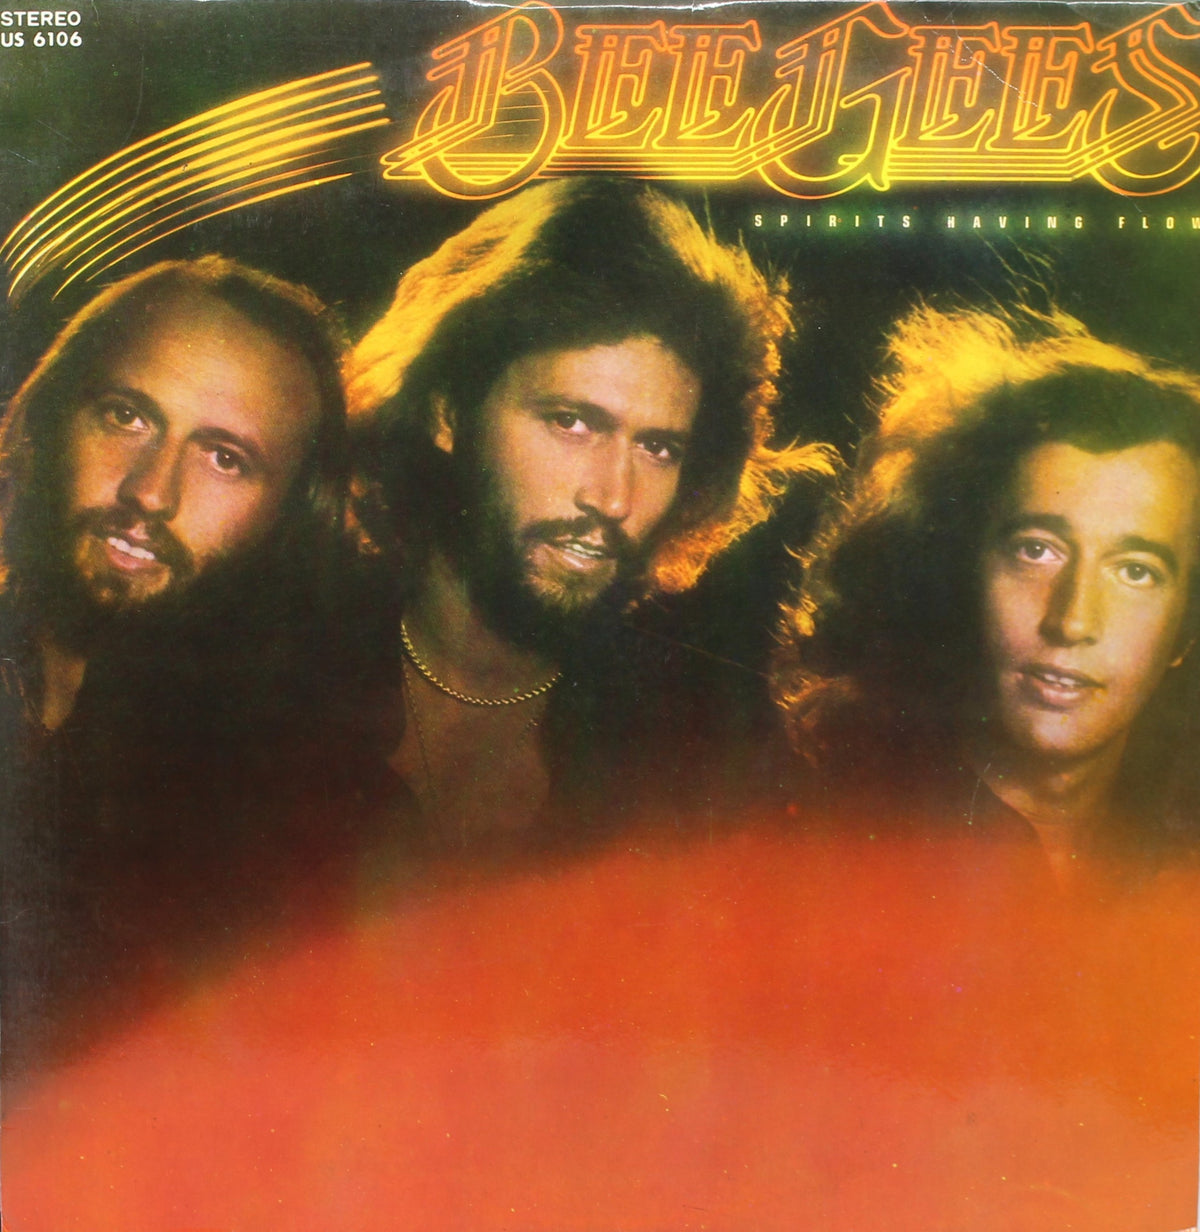 Bee Gees – Spirits Having Flown, Vinyl, LP, Album, Stereo, Malaysia 1979